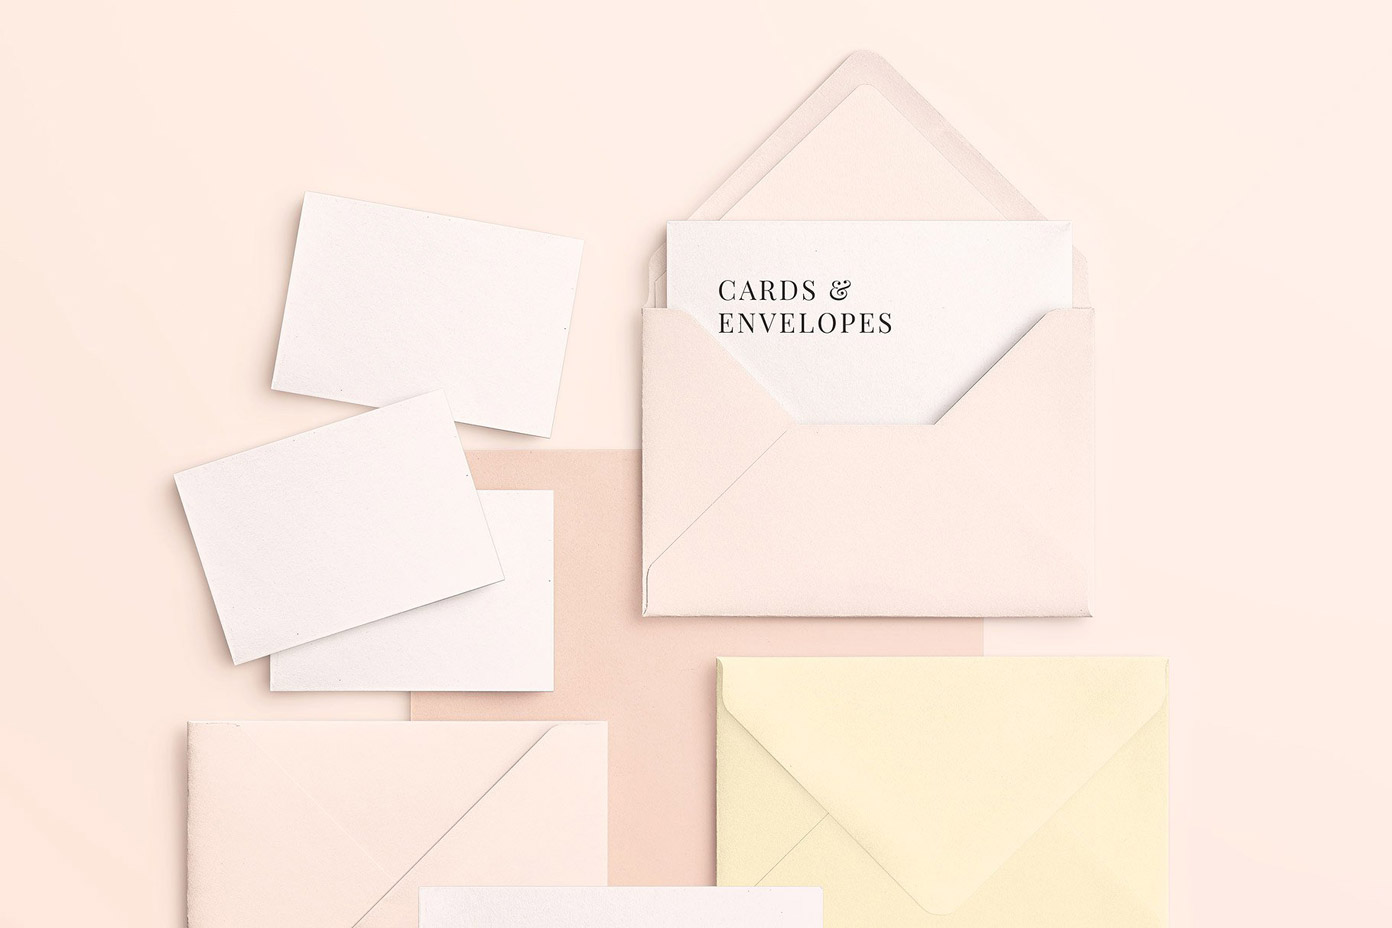 Cards and envelopes mockups scene creator by Román Jusdado